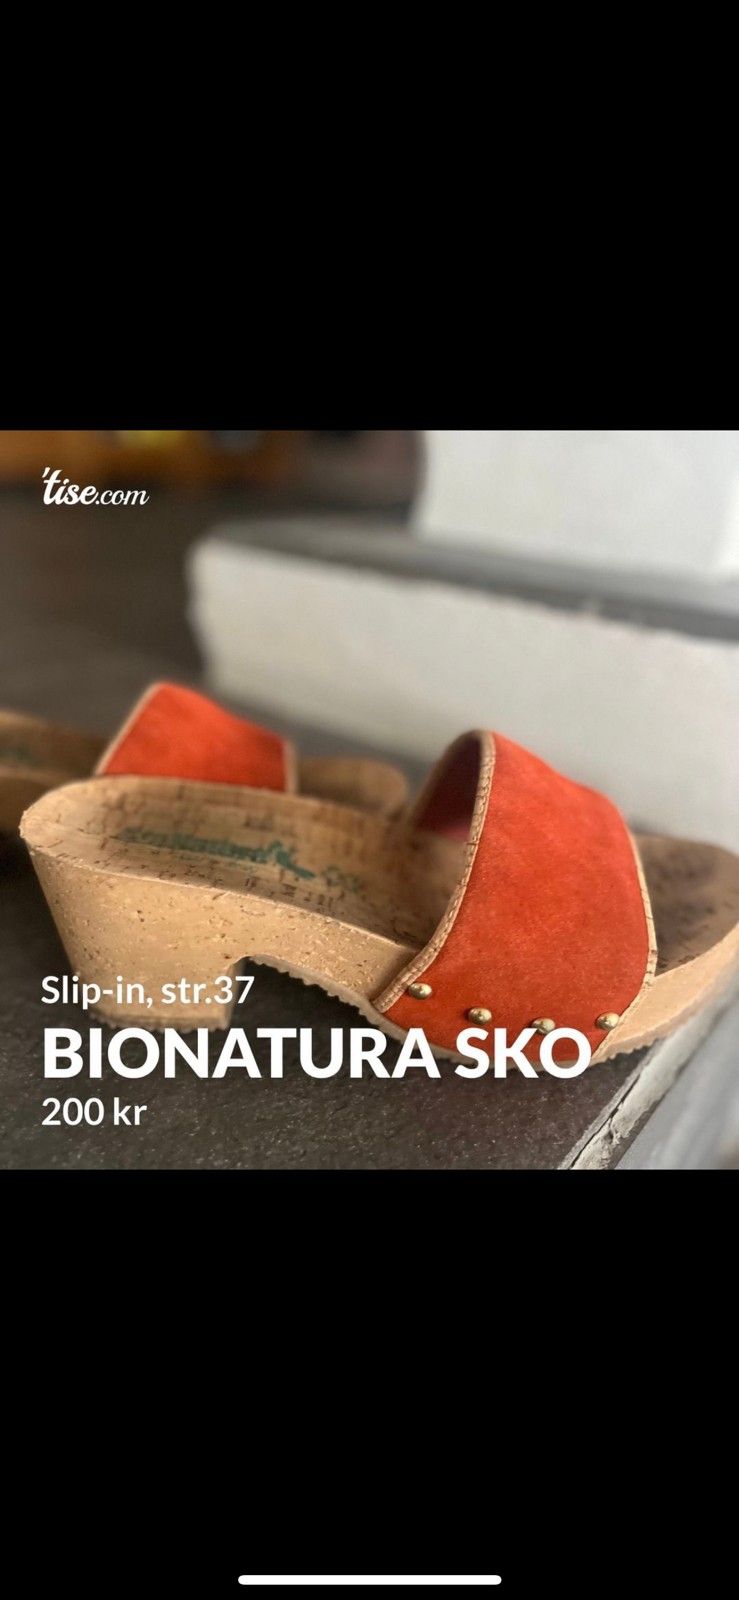 BioNatura sko, | FINN torget